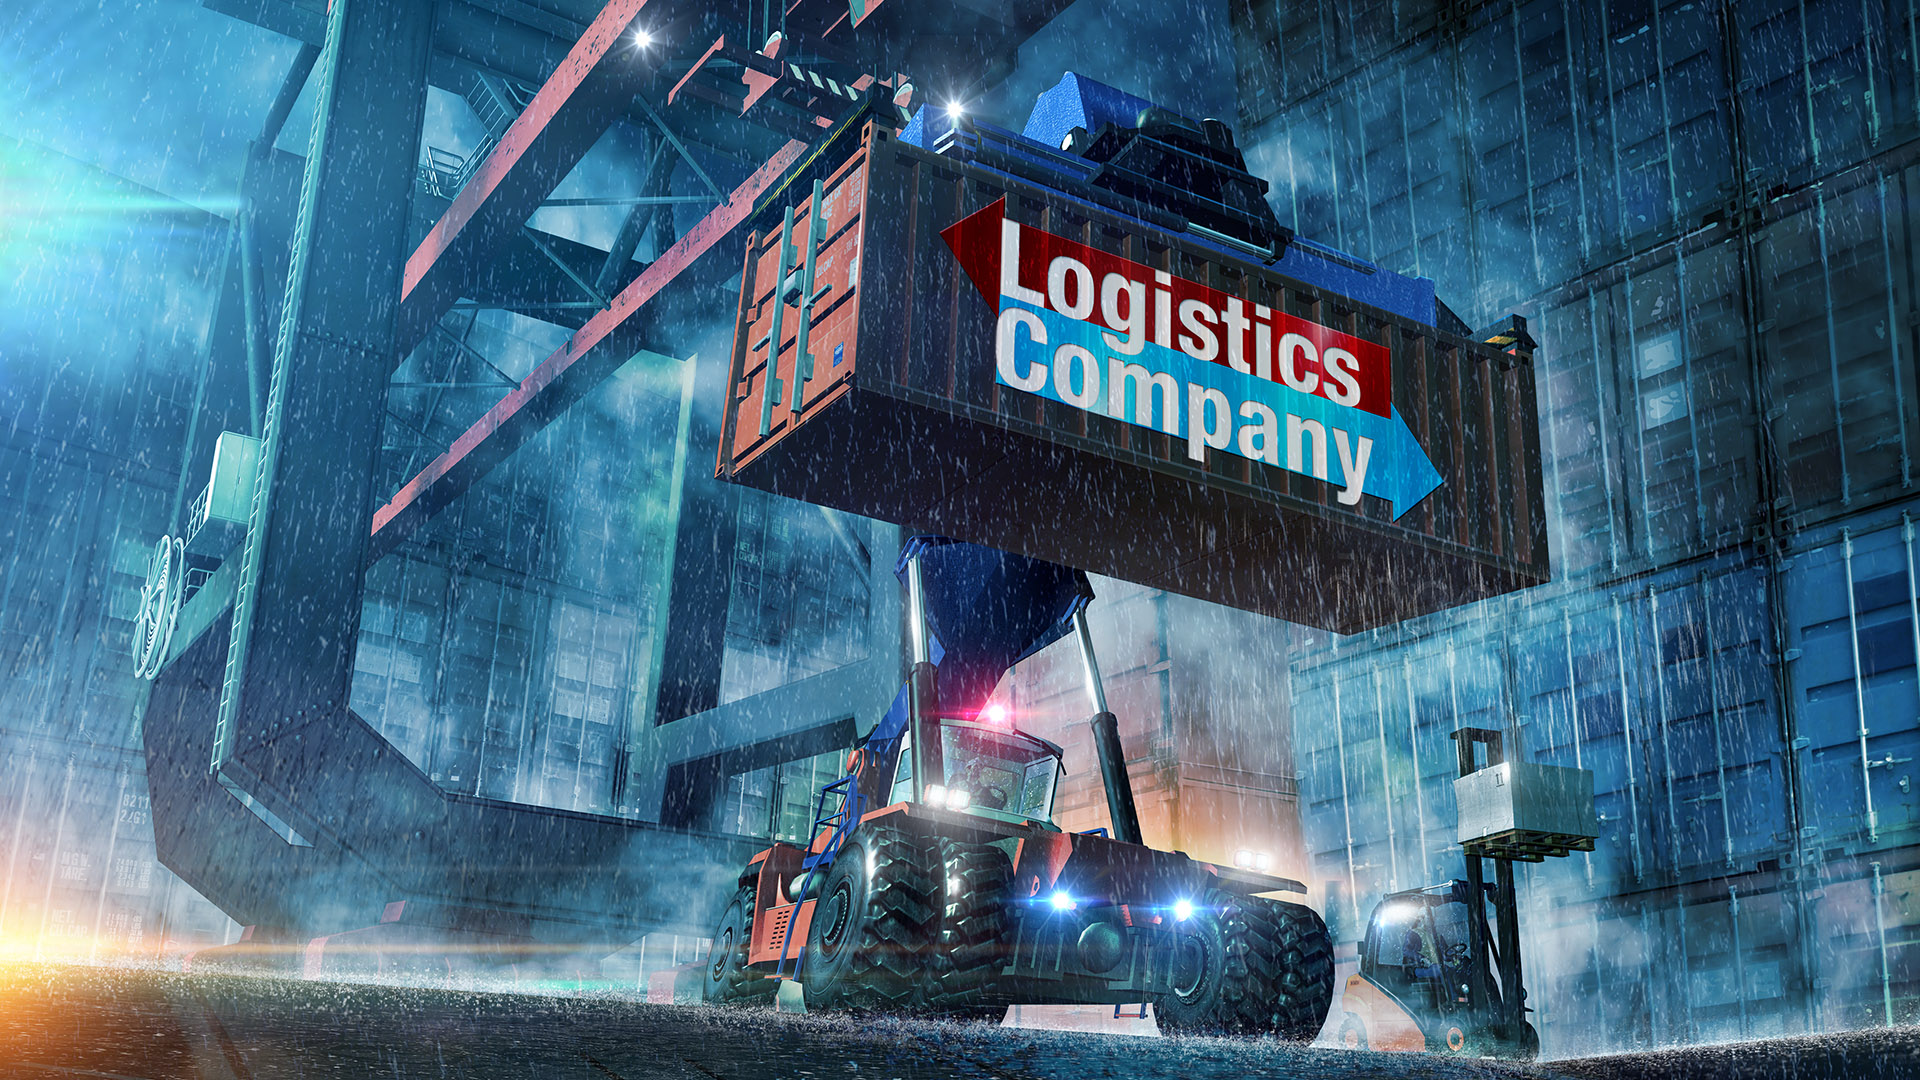 Logistics Company on Steam